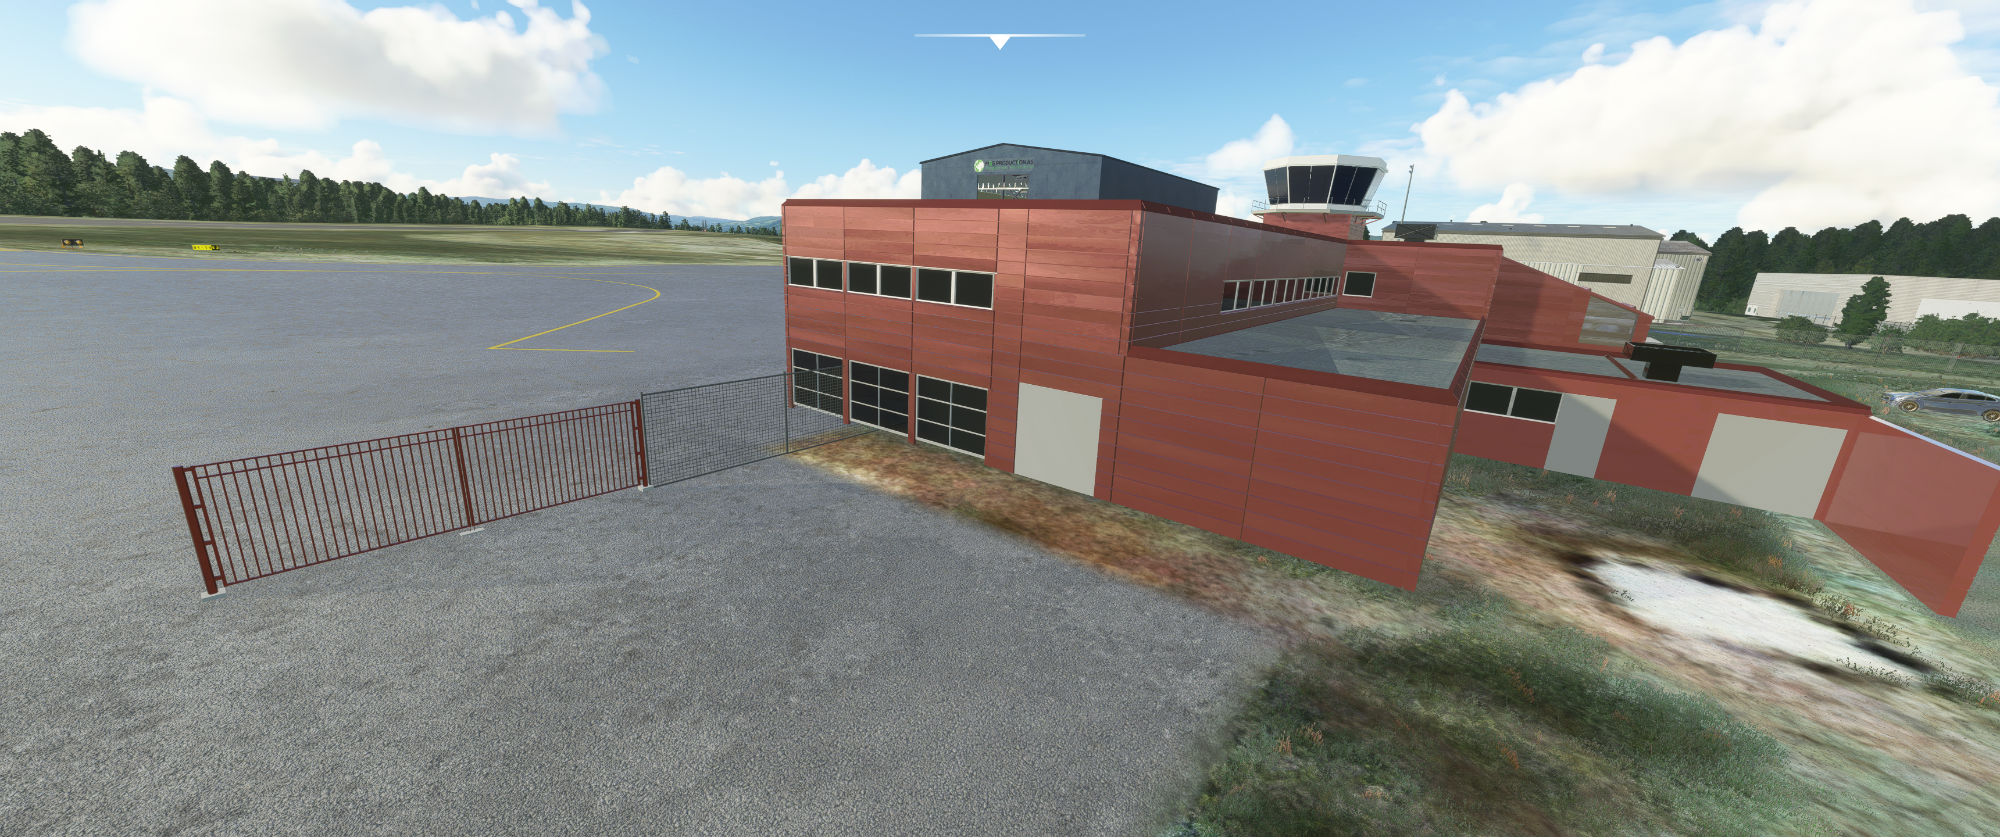 Microsoft Flight Simulator Screenshot 2021.10.11 - 21.29.19.44.png